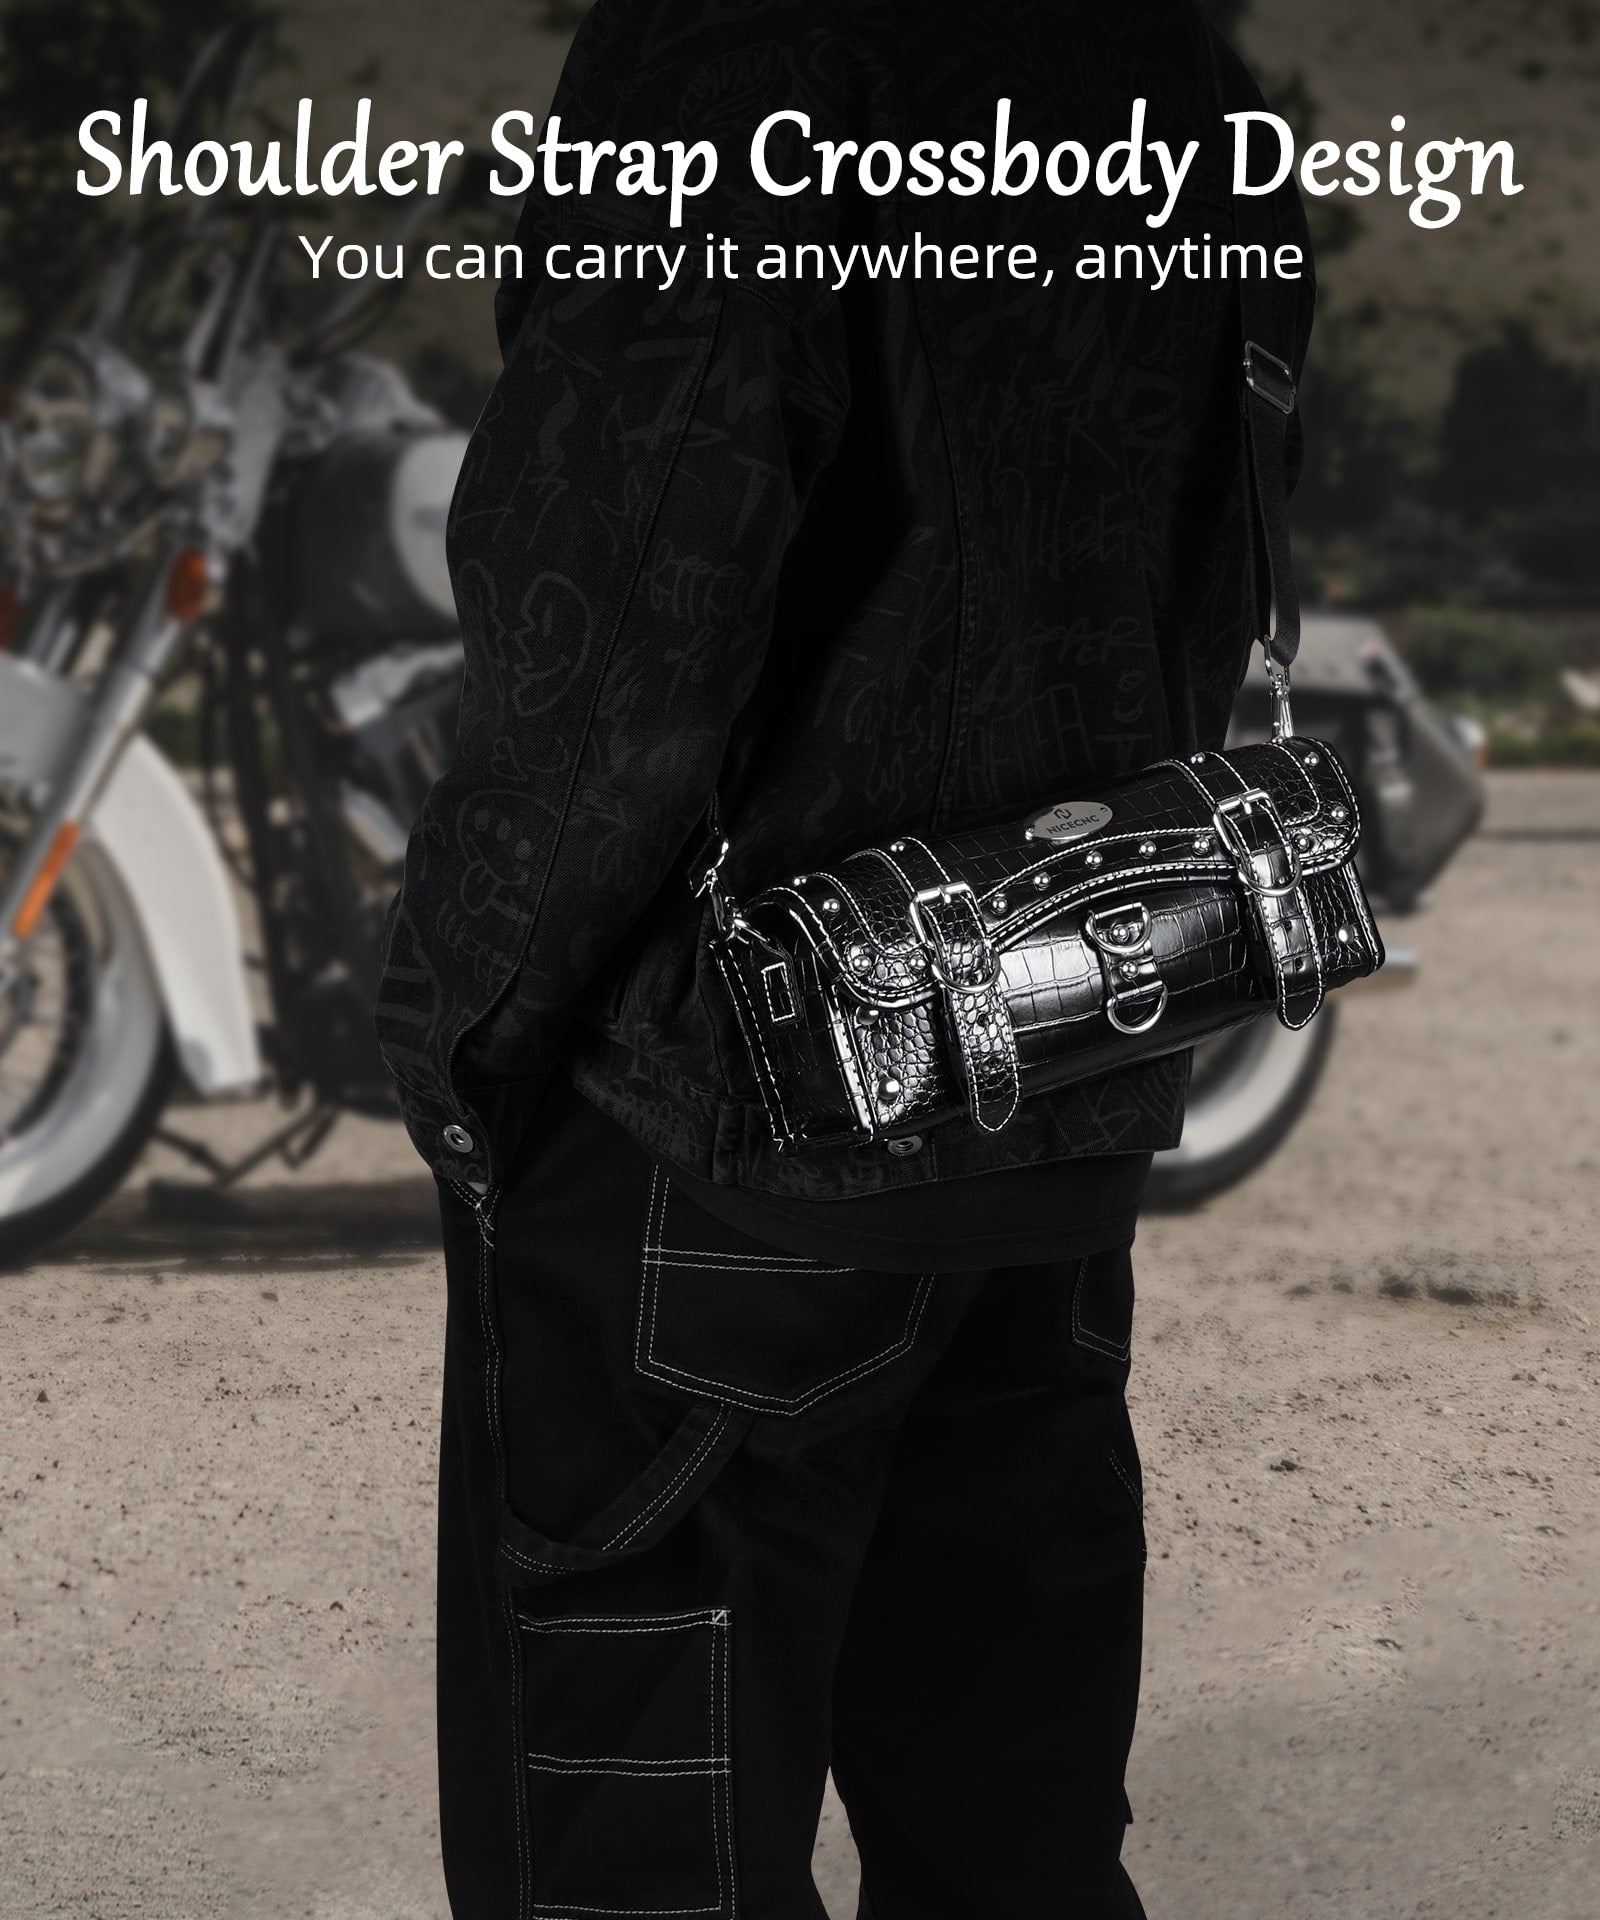 Vintage Motorcycle Handlebar Front Fork Bag Crocodile Texture PU Leather